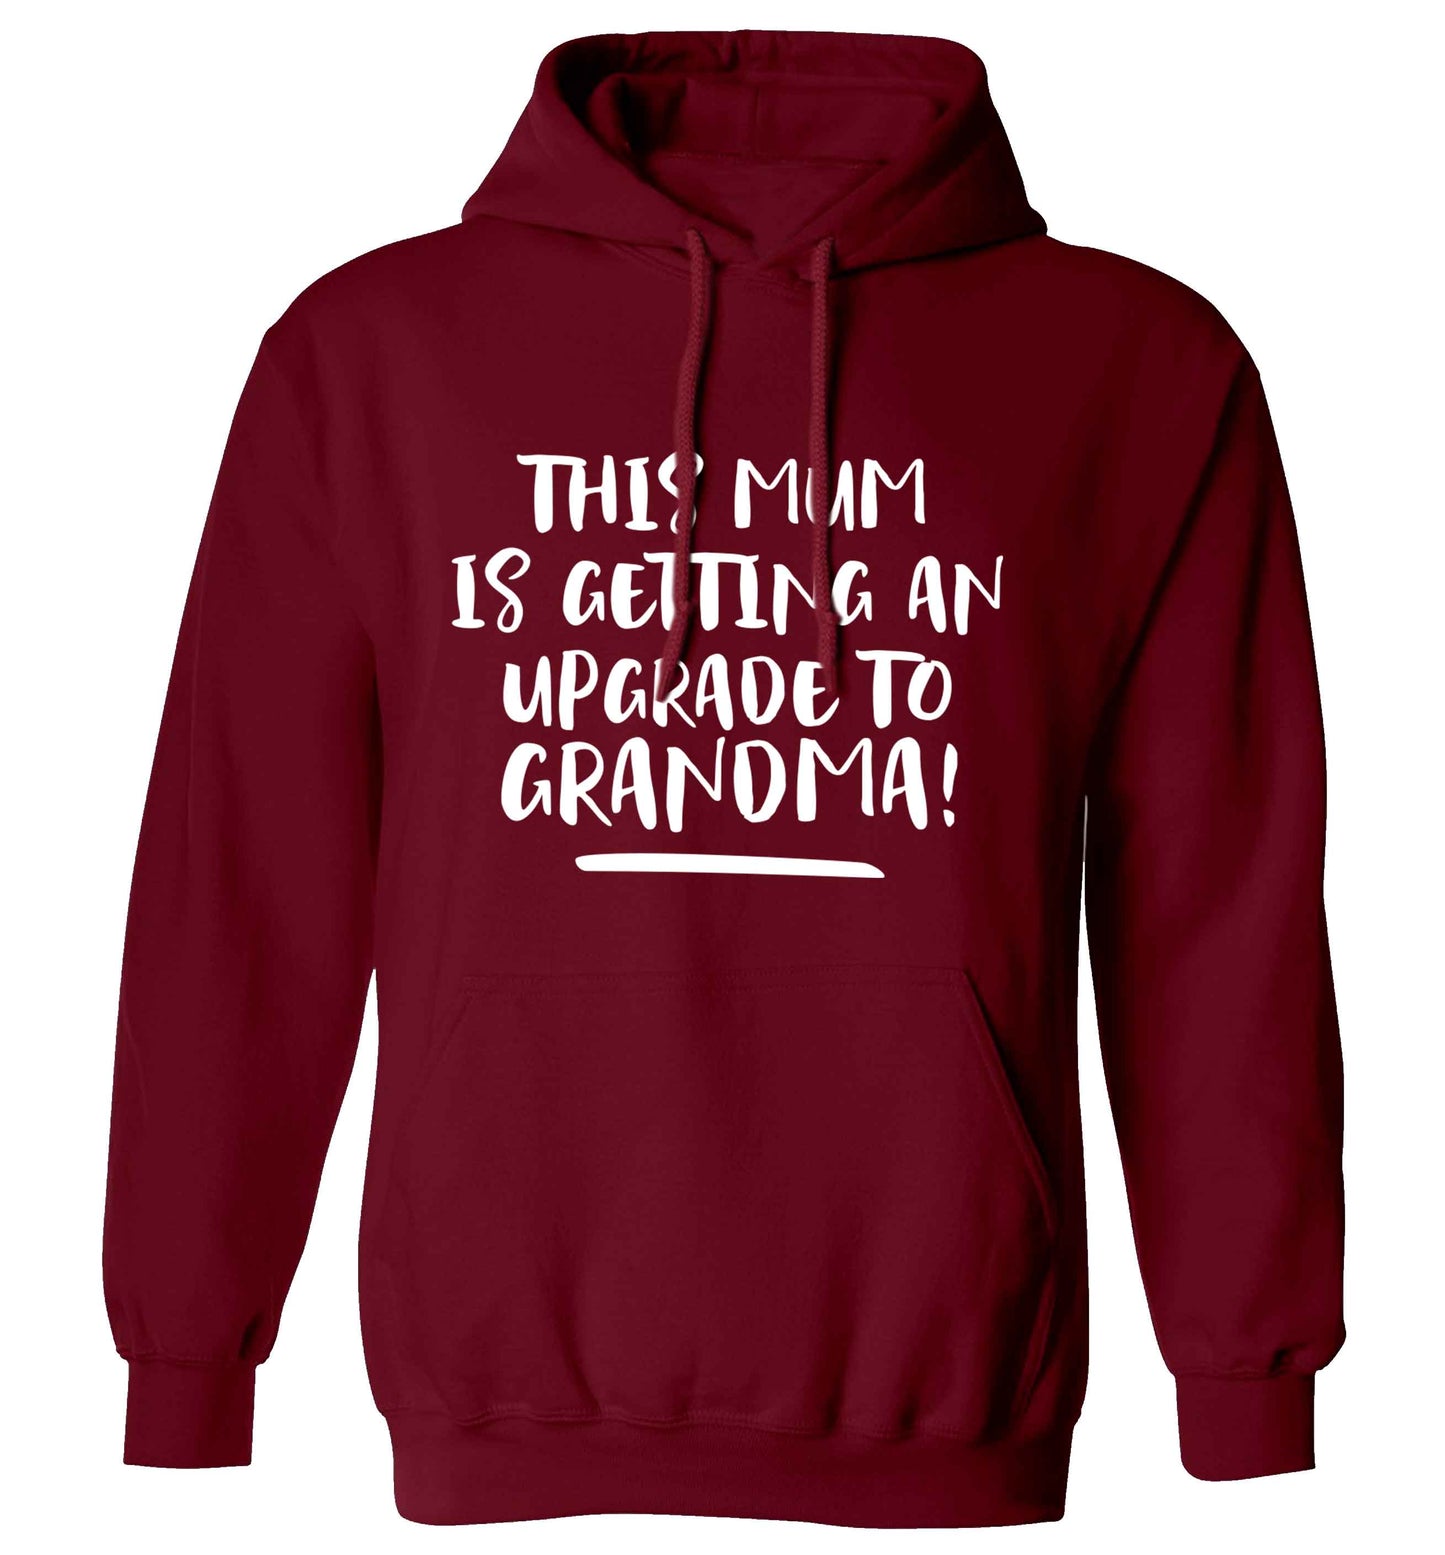 This mum is getting an upgrade to grandma! adults unisex maroon hoodie 2XL